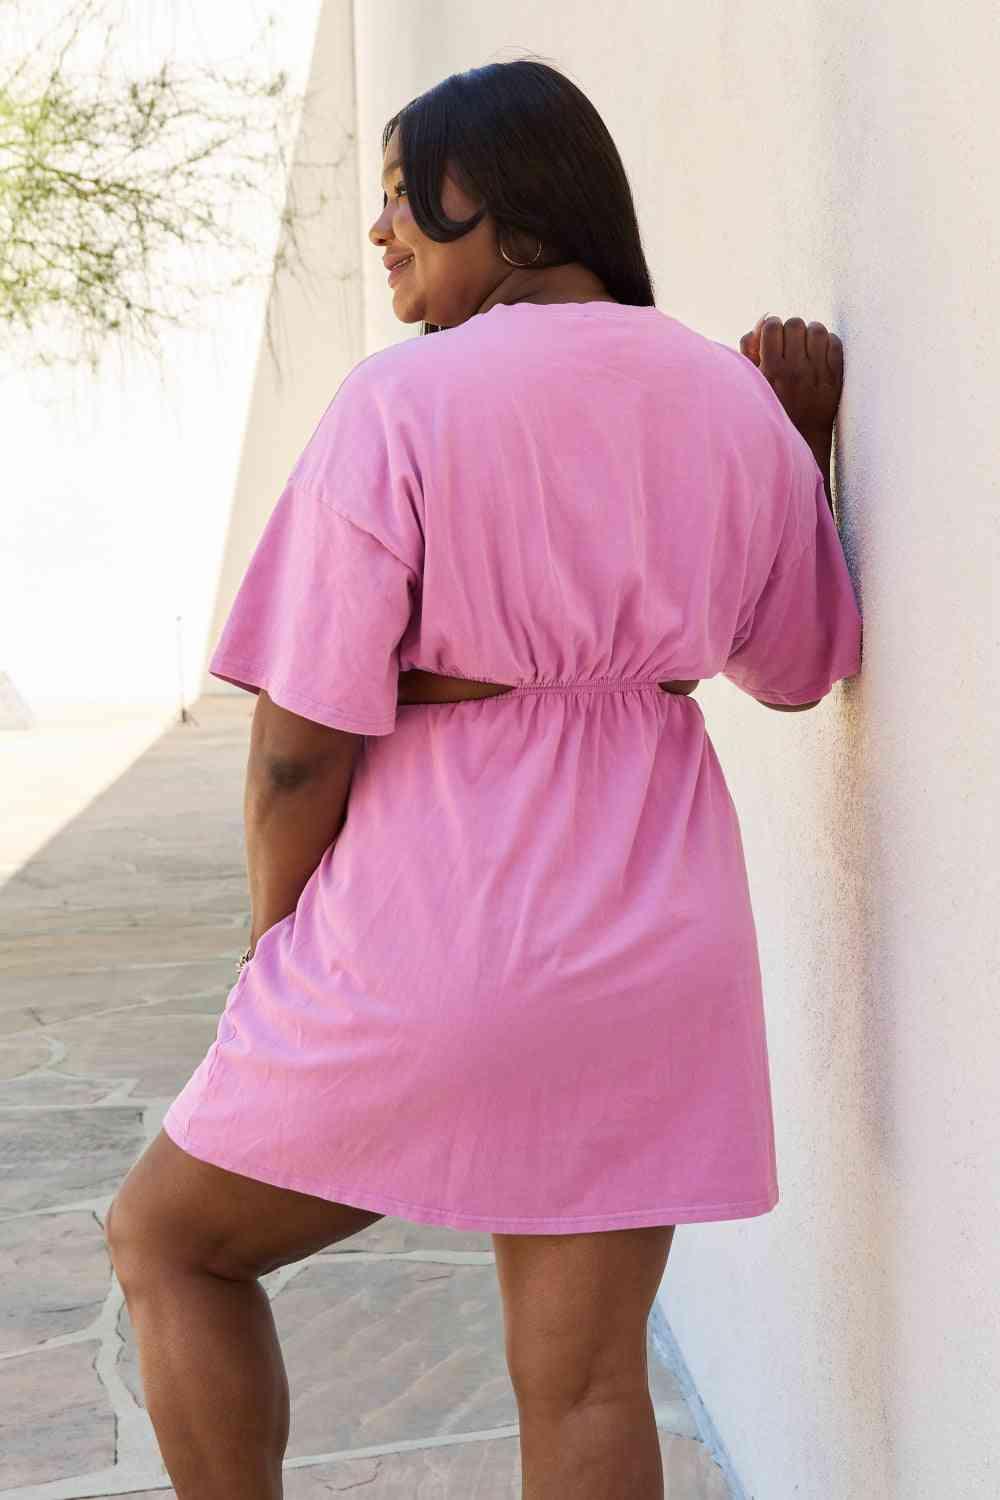 HEYSON Summer Field Full Size Cutout T-Shirt Dress in Carnation Pink - AMIClubwear